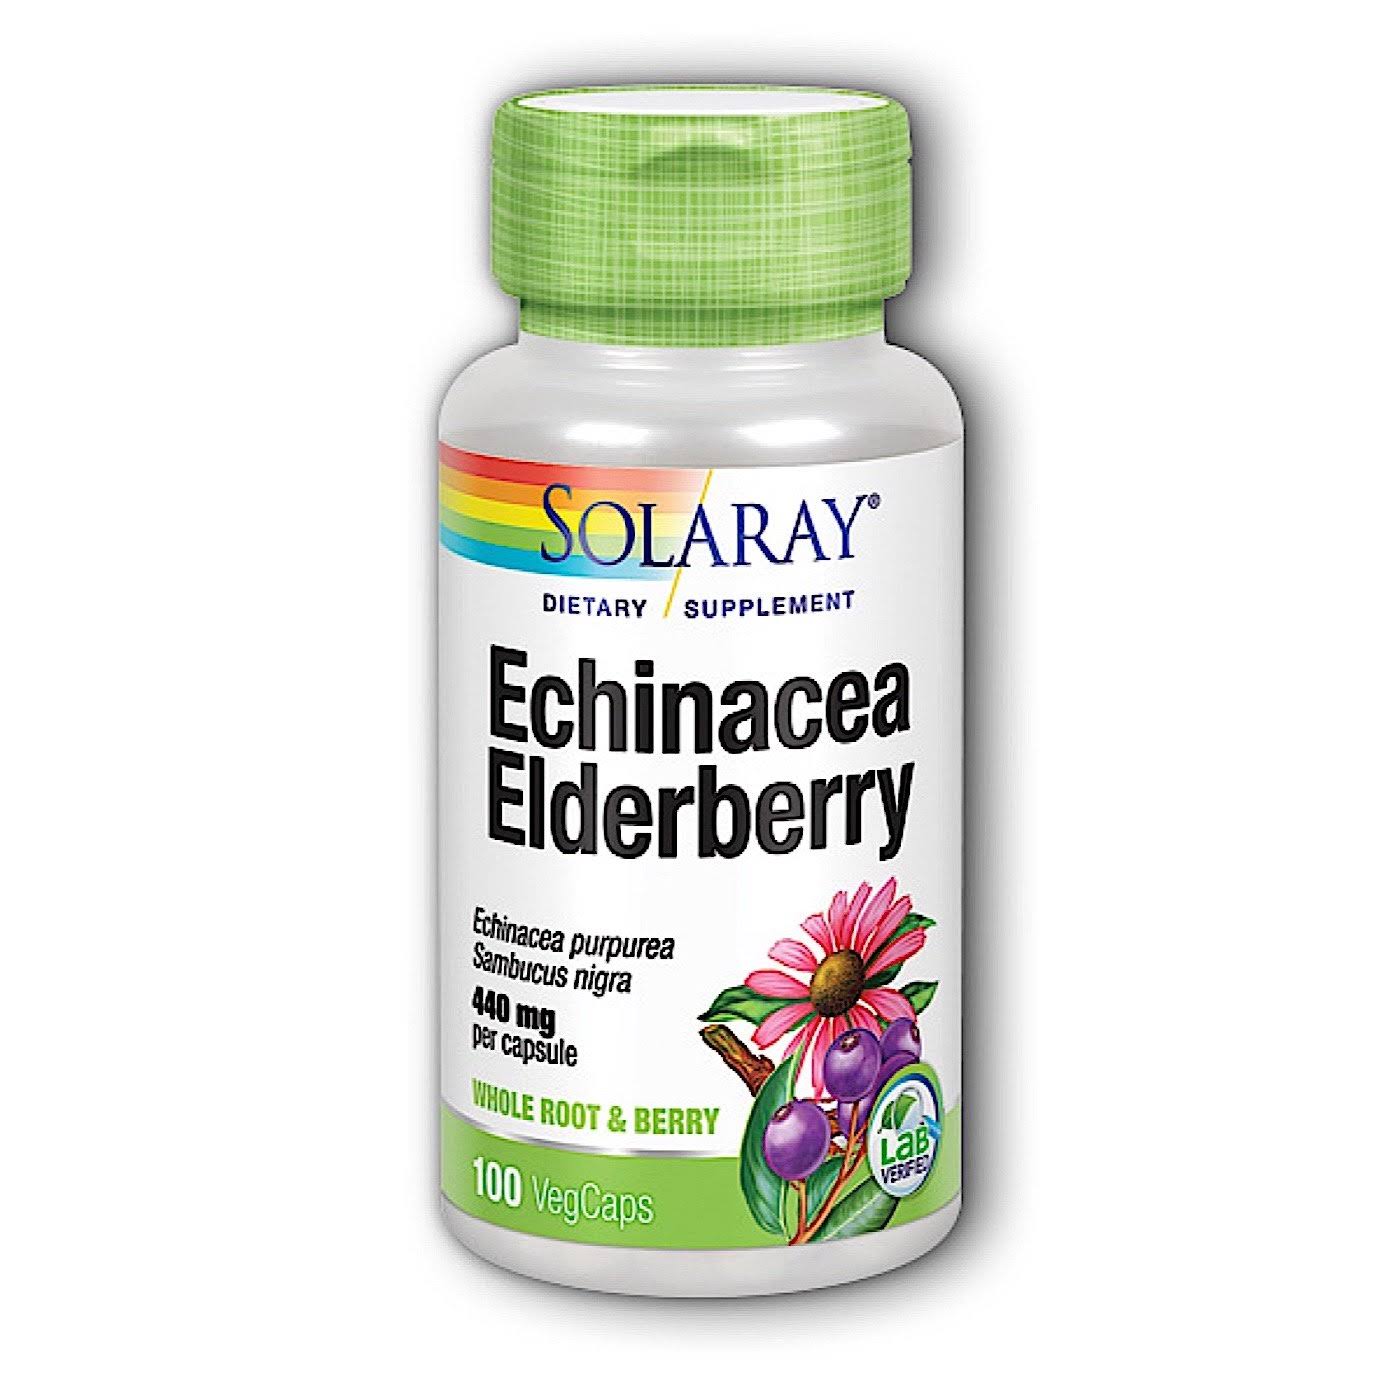 Solaray Echinacea and Elderberry Capsules Supplement - 440mg, 100ct